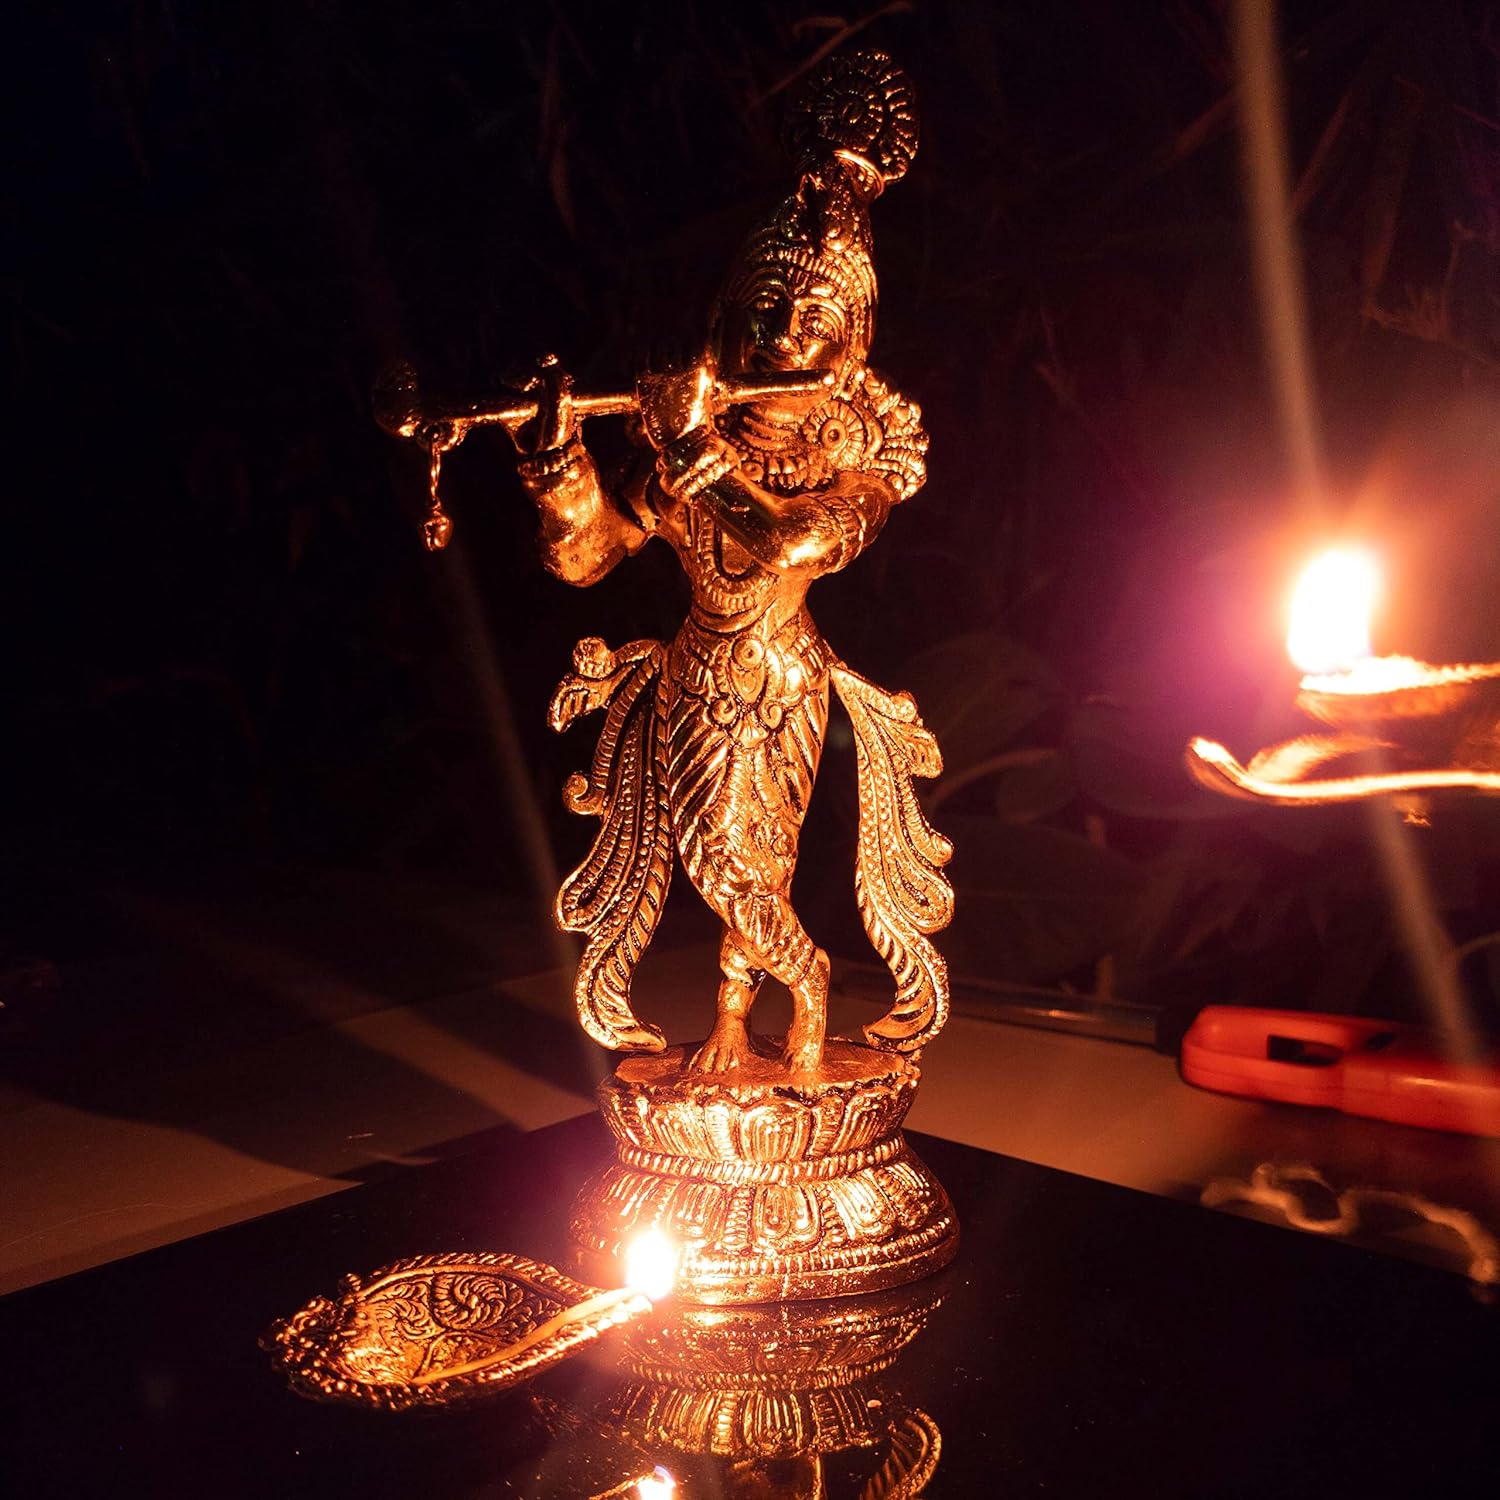 WC_Lord Krishna with bansuri Janmashtami Krishna Statue Figurine with murli Bansi-Hindu God of Love and Divine Joy-Murlidhar Kishna Idol for Indian Religious Festival– Home Decor Item